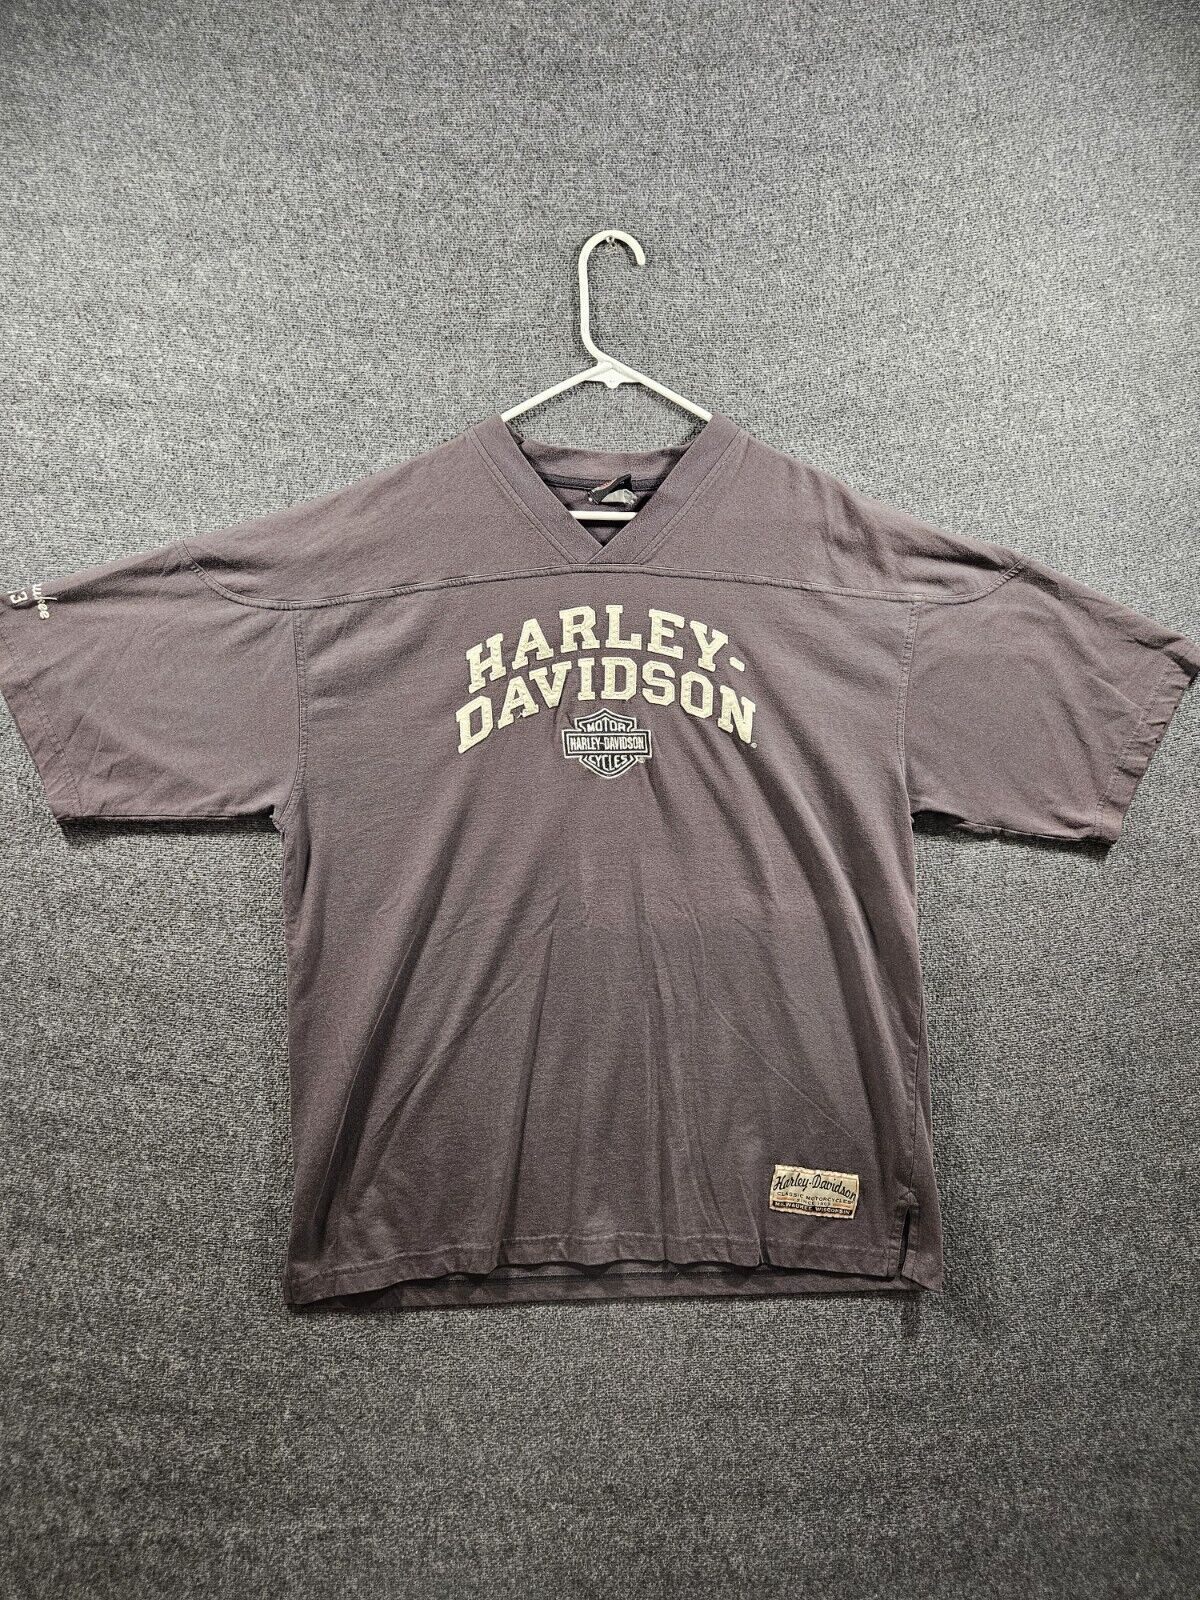 Vintage Men\'s Harley-Davidson Shirt Las Vegas Size Unknown Used FAST SHIPPING